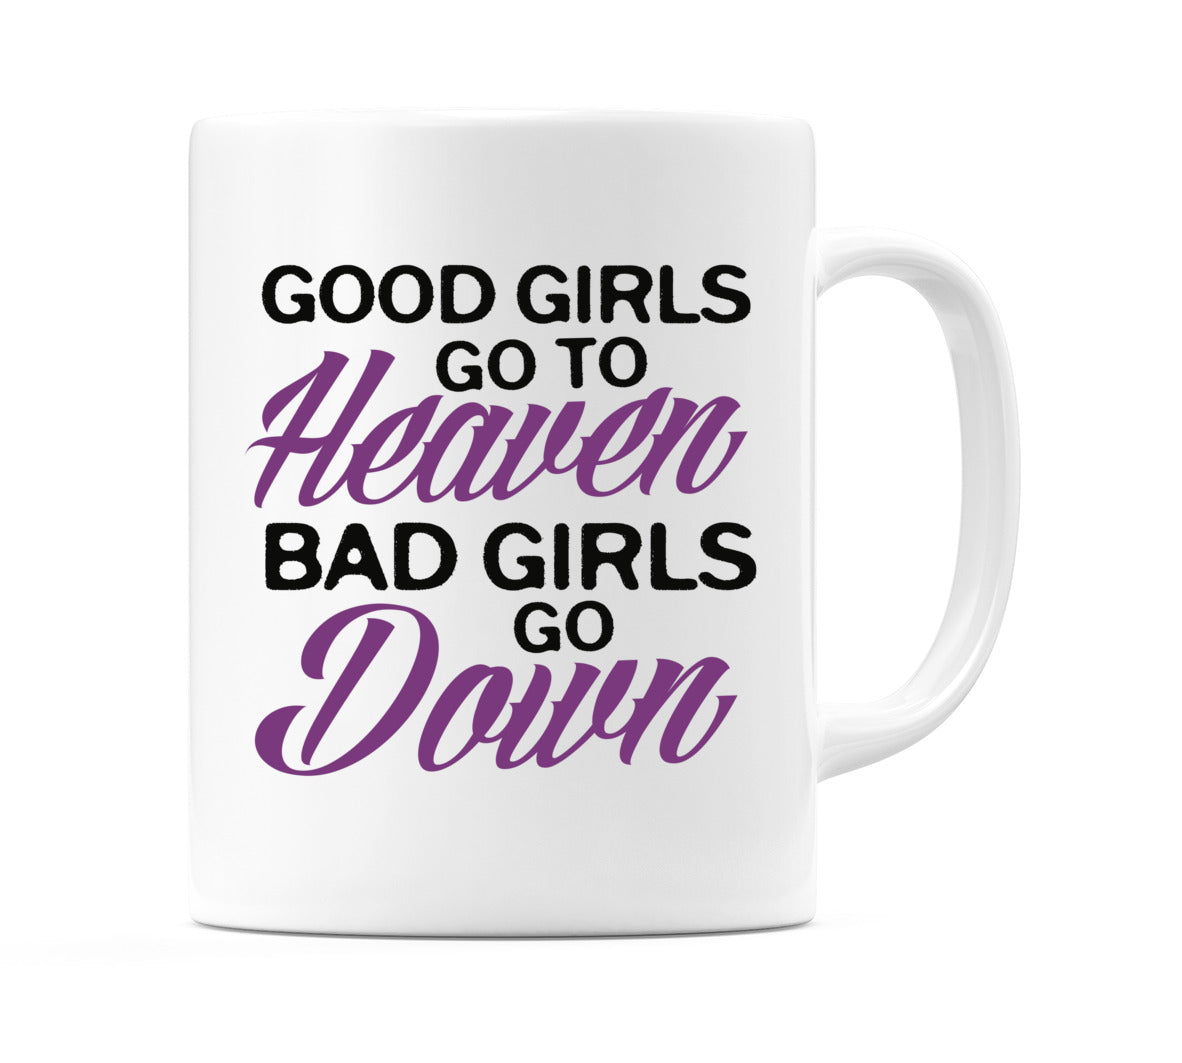 Good Girls Go To Heaven - Bad Girls Go Down Mug